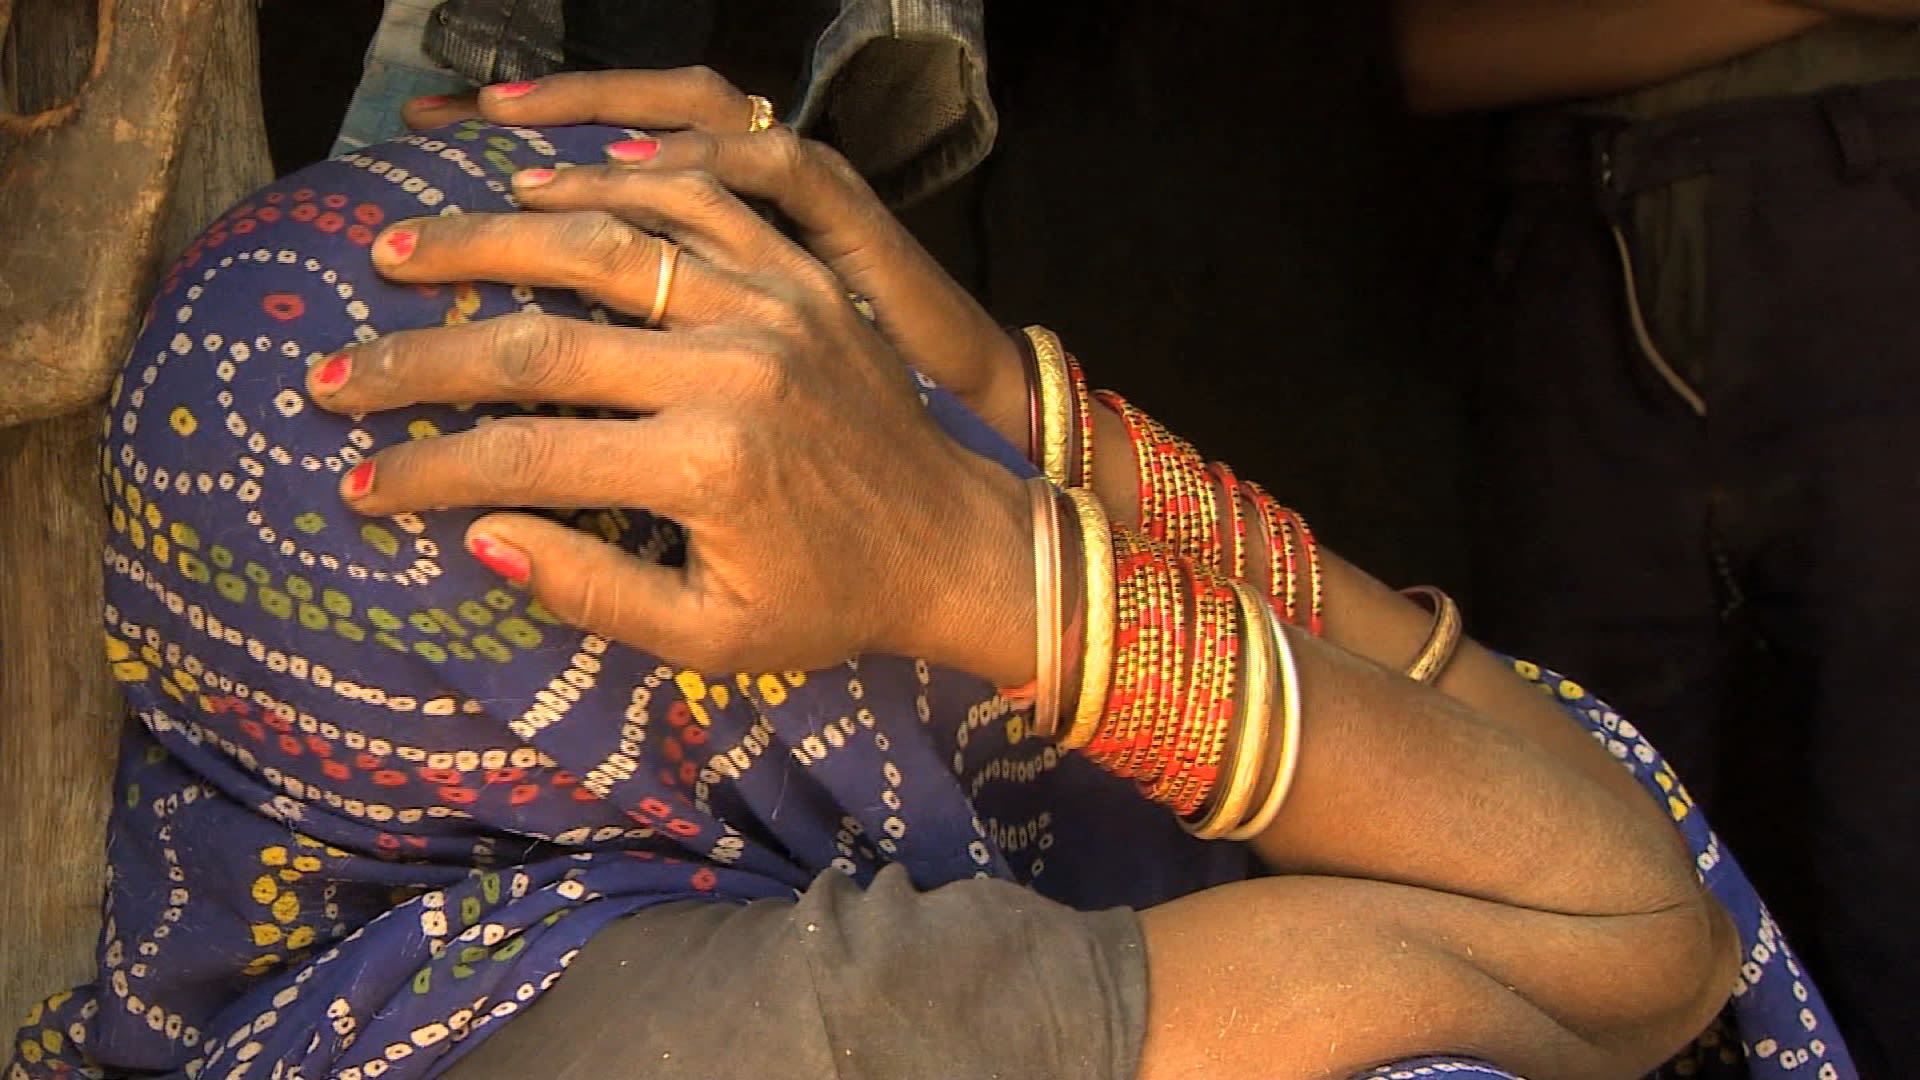 Saree Forced Rape - Third Indian allegedly raped, set on fire | CNN